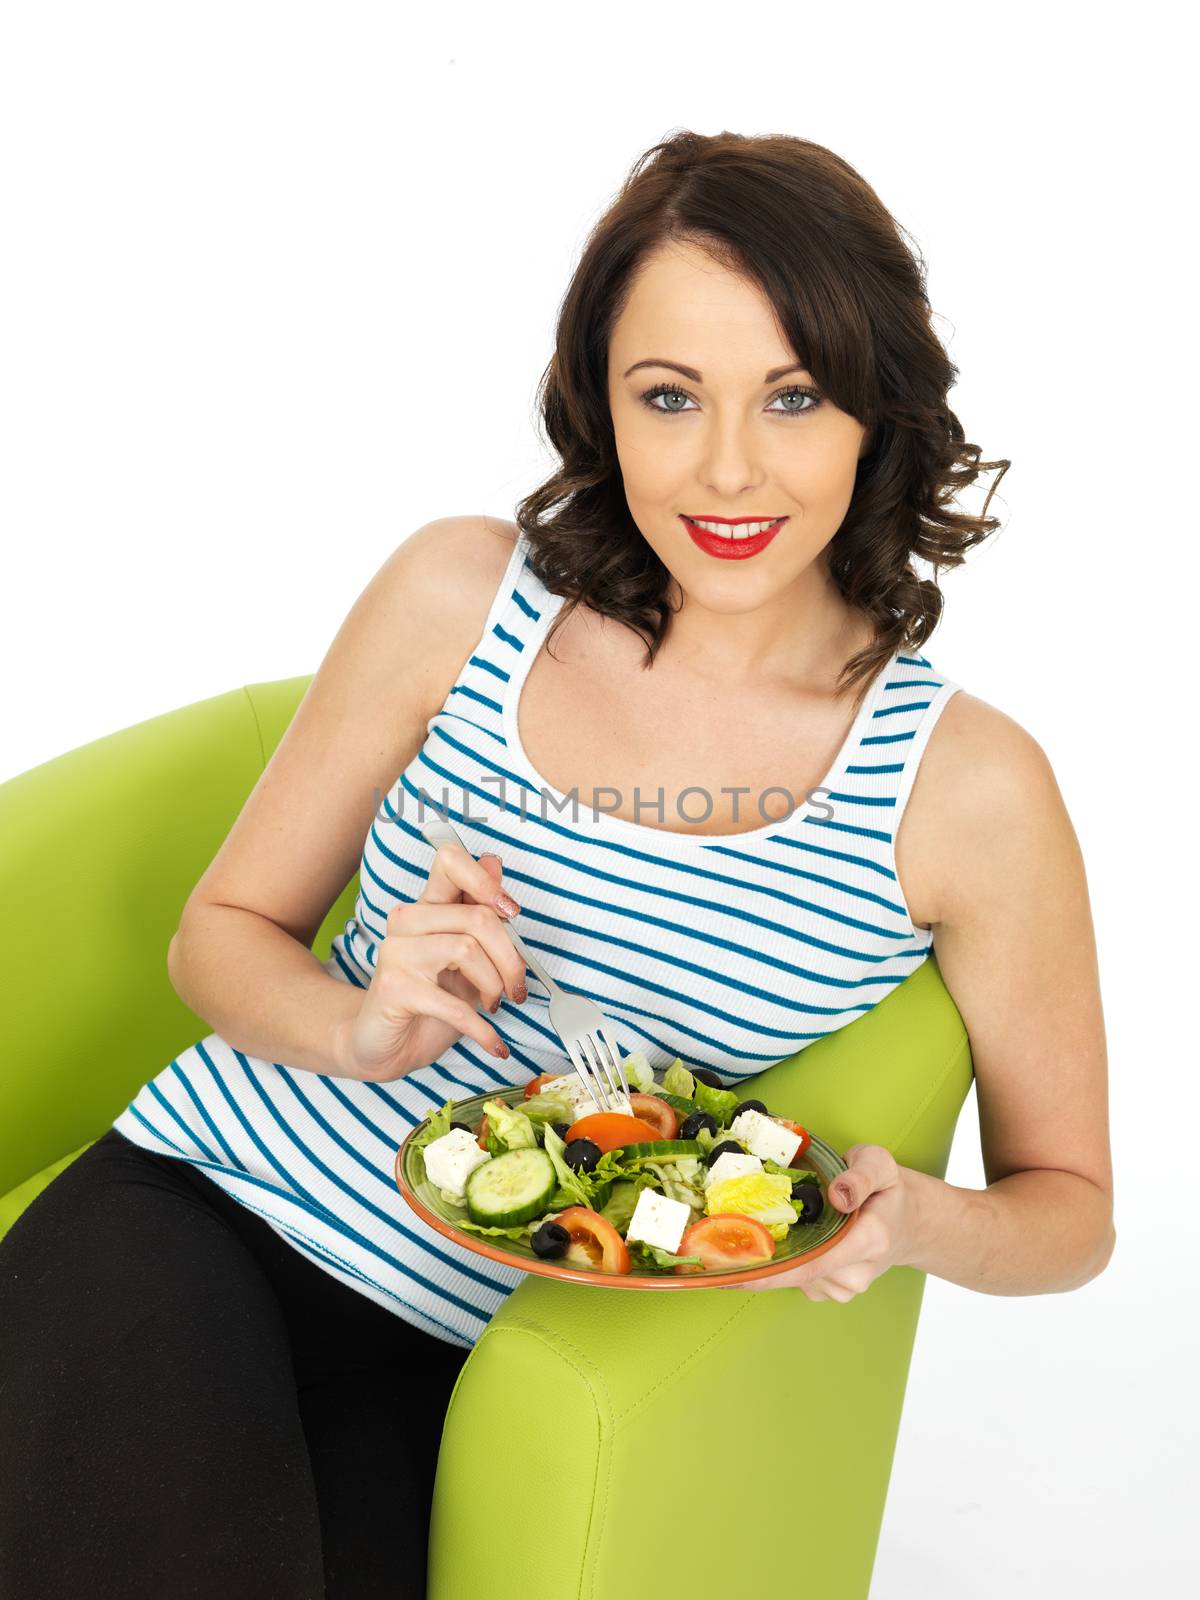 Young Woman Eating a Fresh Crispy Greek Salad by Whiteboxmedia